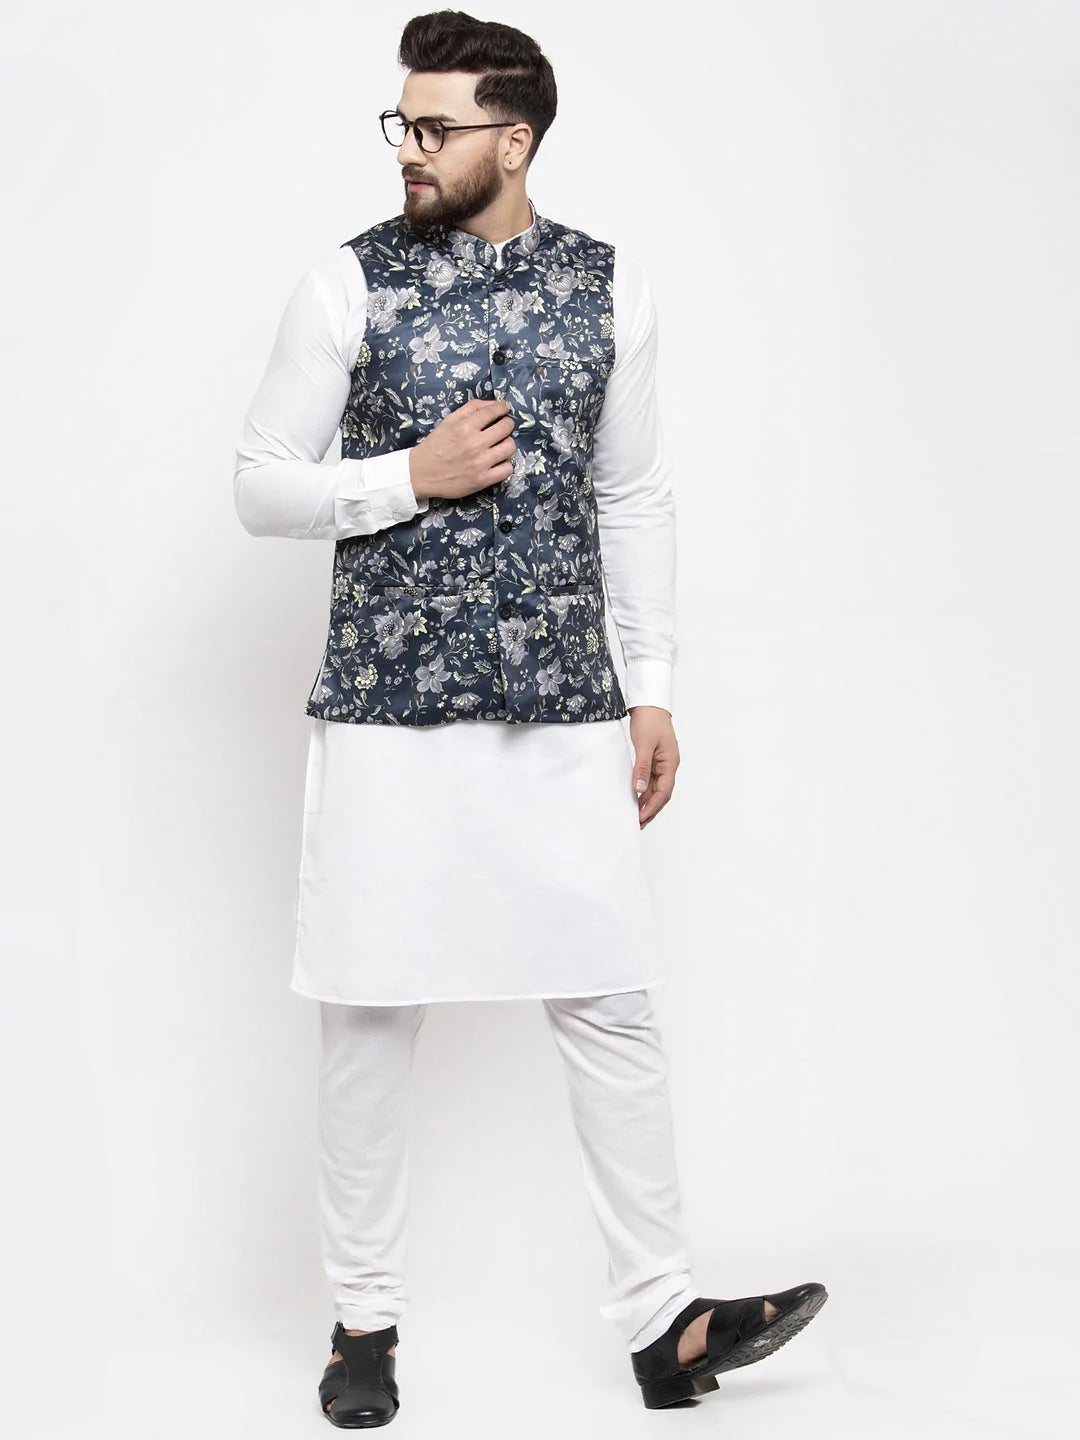 Jompers Men's Solid Cotton Kurta Pajama with Printed Waistcoat ( JOKP WC 4058 Navy-W )